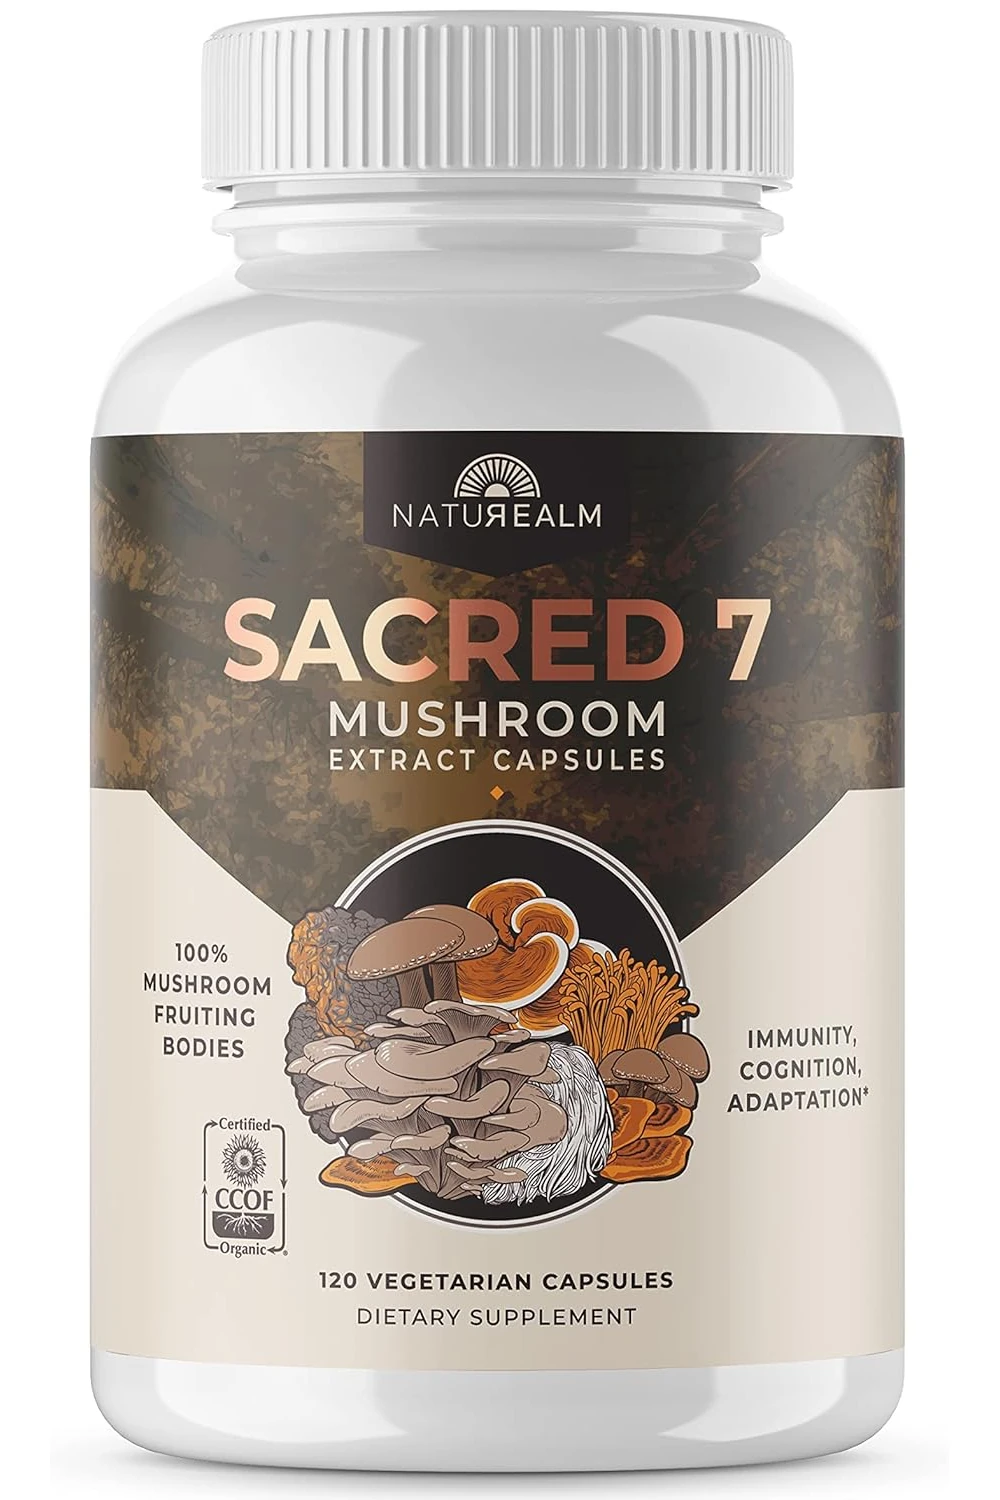 Naturealm Sacred 7 Mushroom Extract Capsules